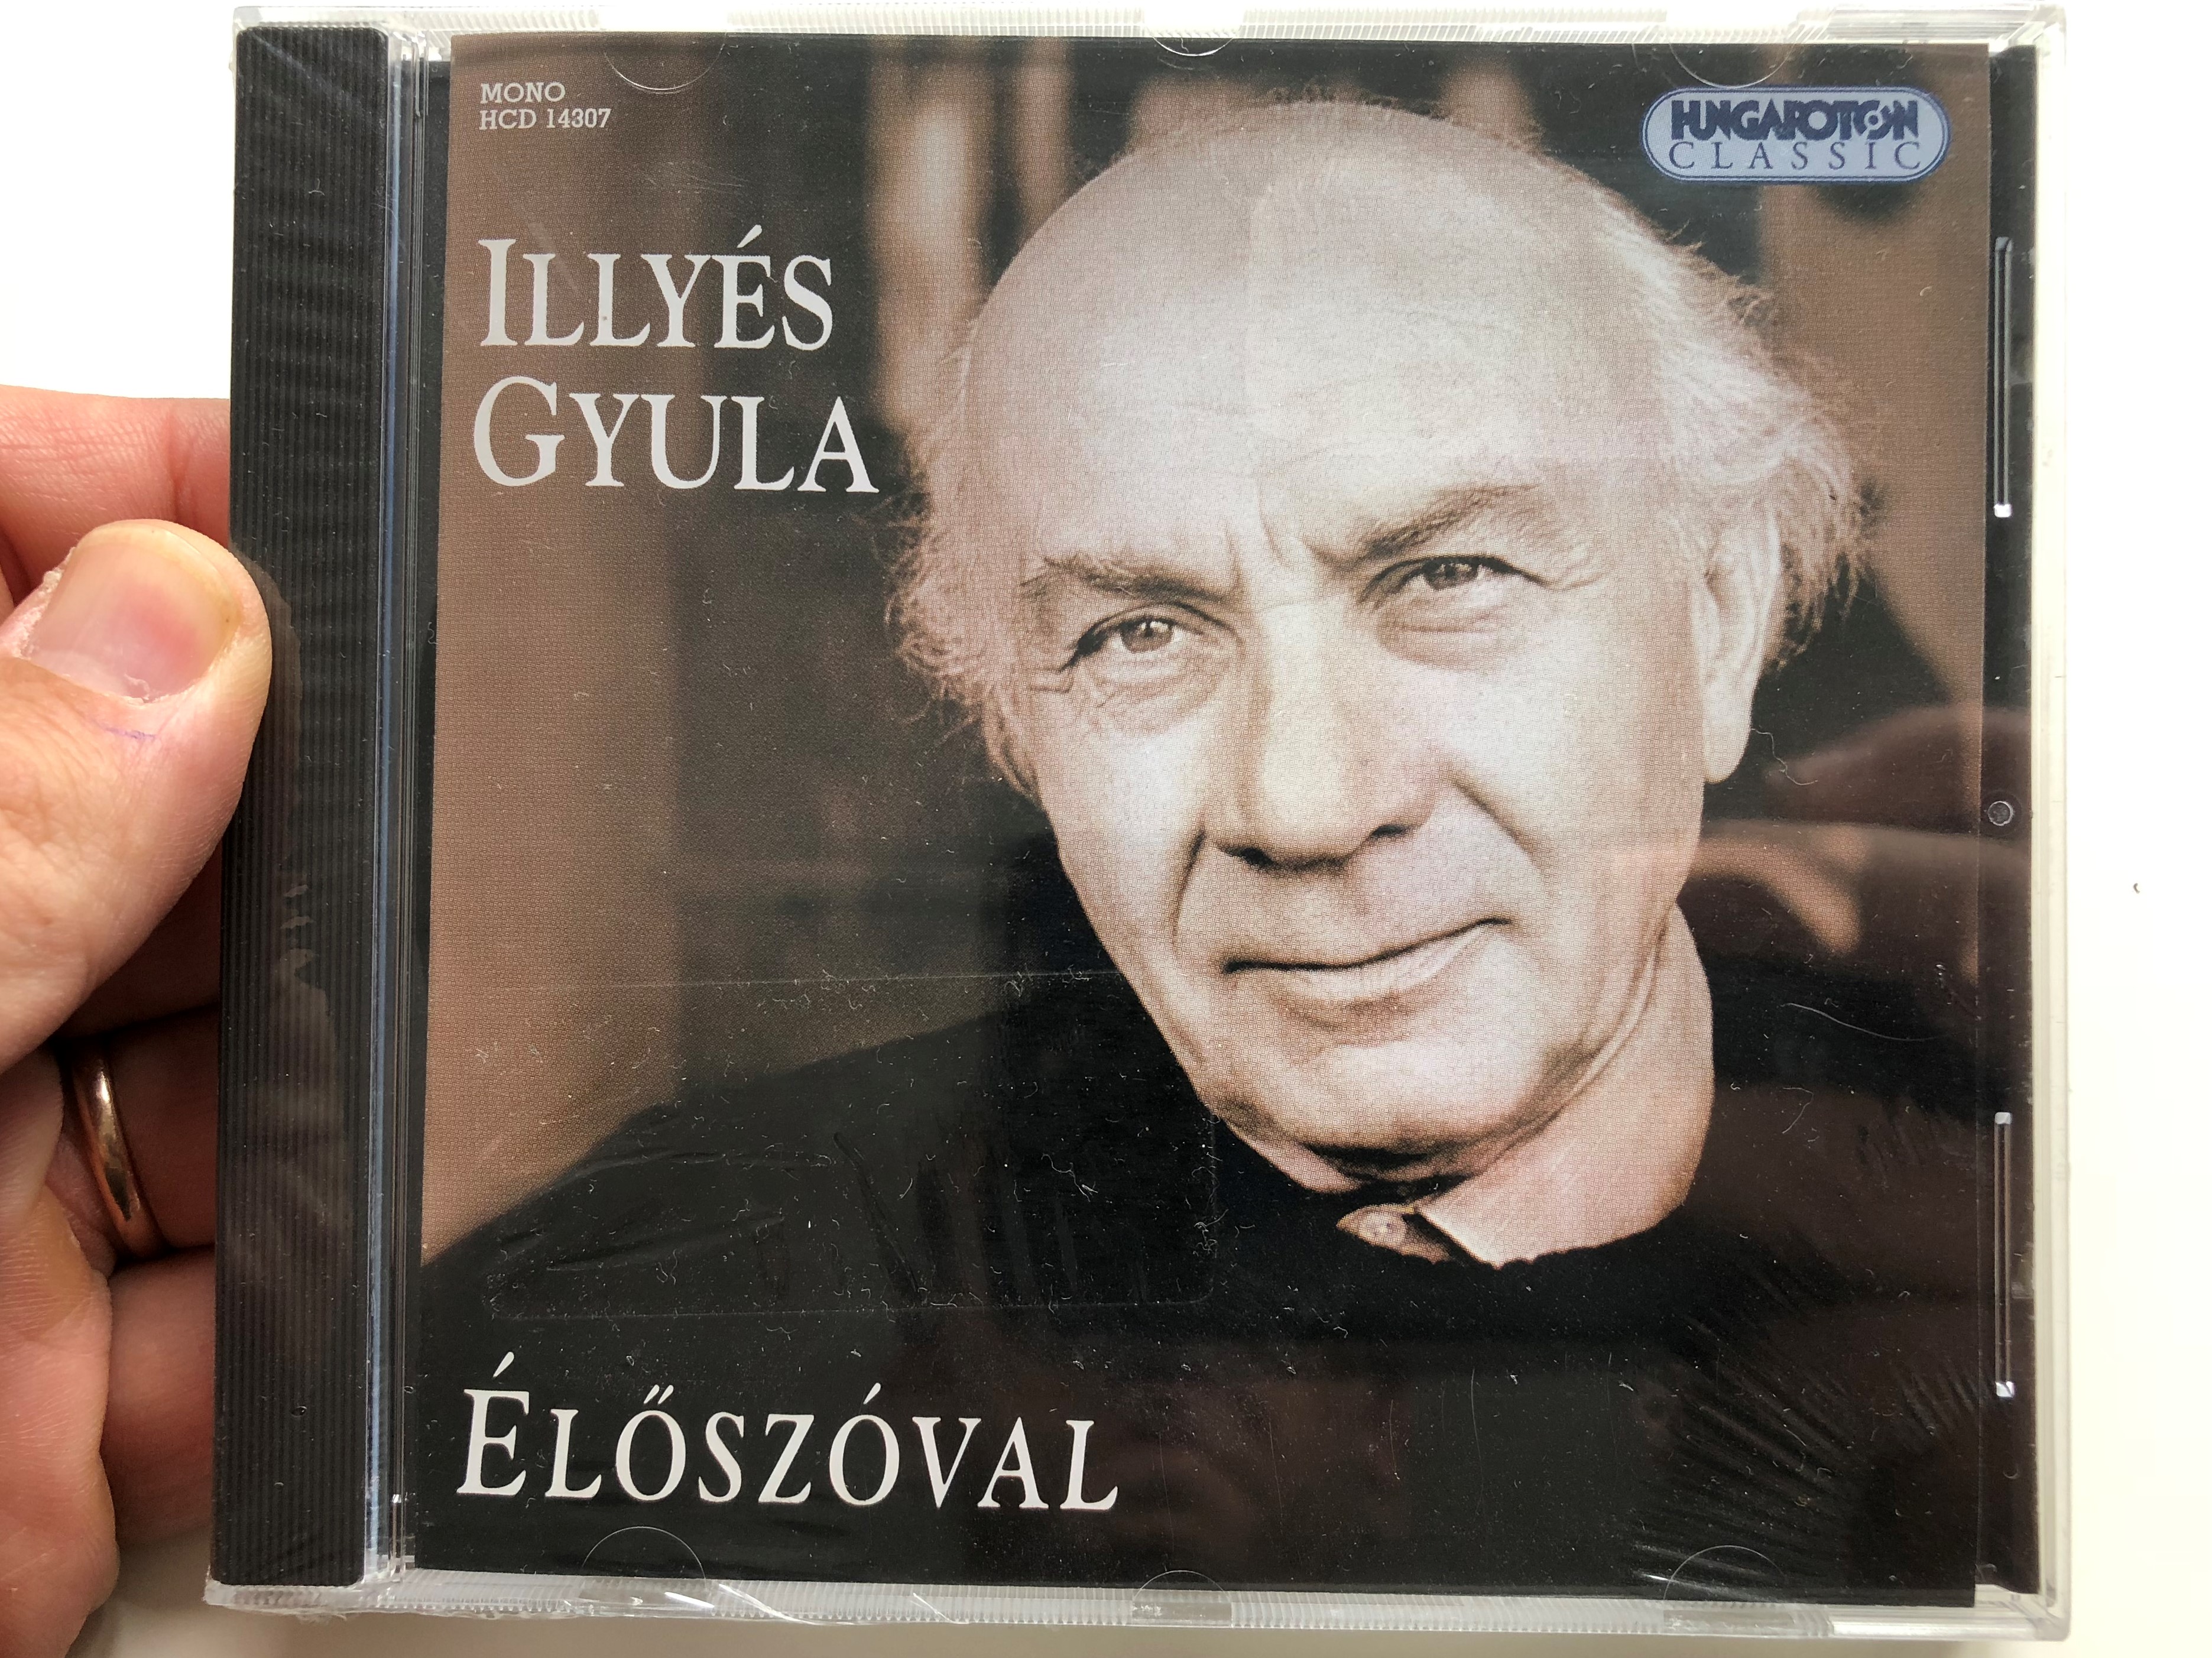 illy-s-gyula-l-sz-val-hungaroton-classic-audio-cd-2002-mono-hcd-14307-1-.jpg